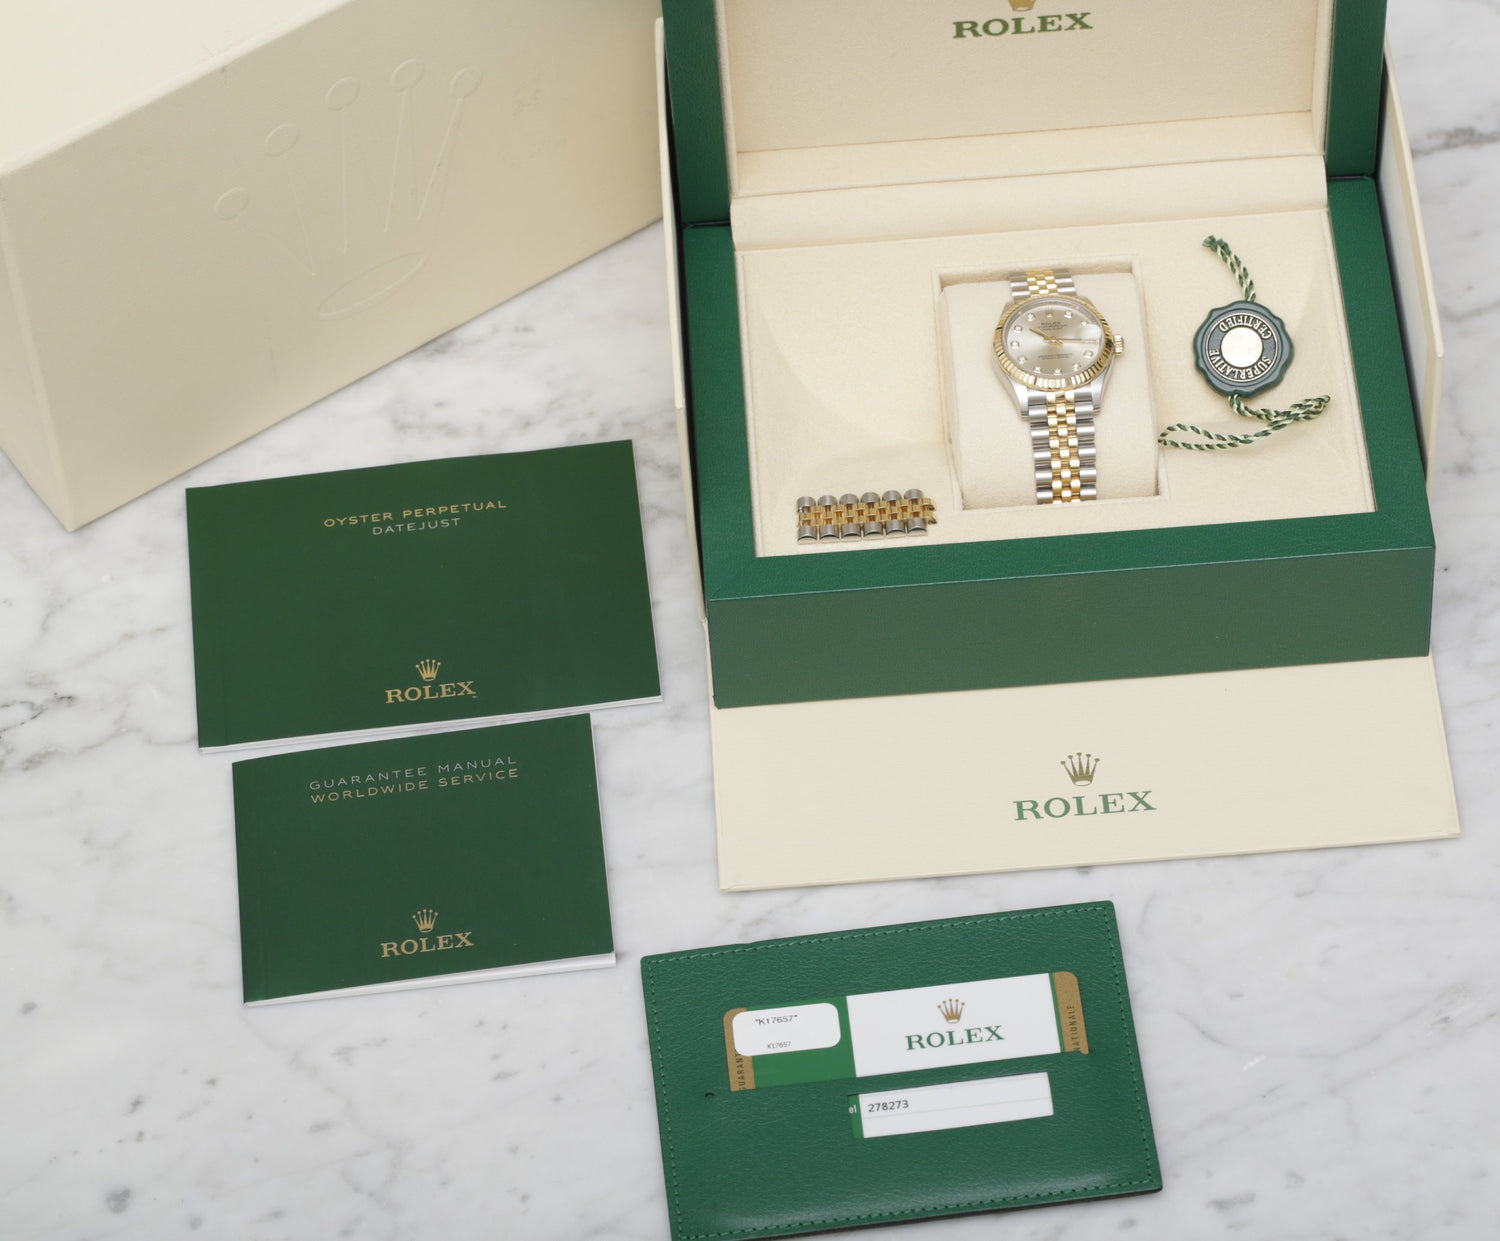 Rolex Datejust 31 half gold green diamond iv 278273, Luxury